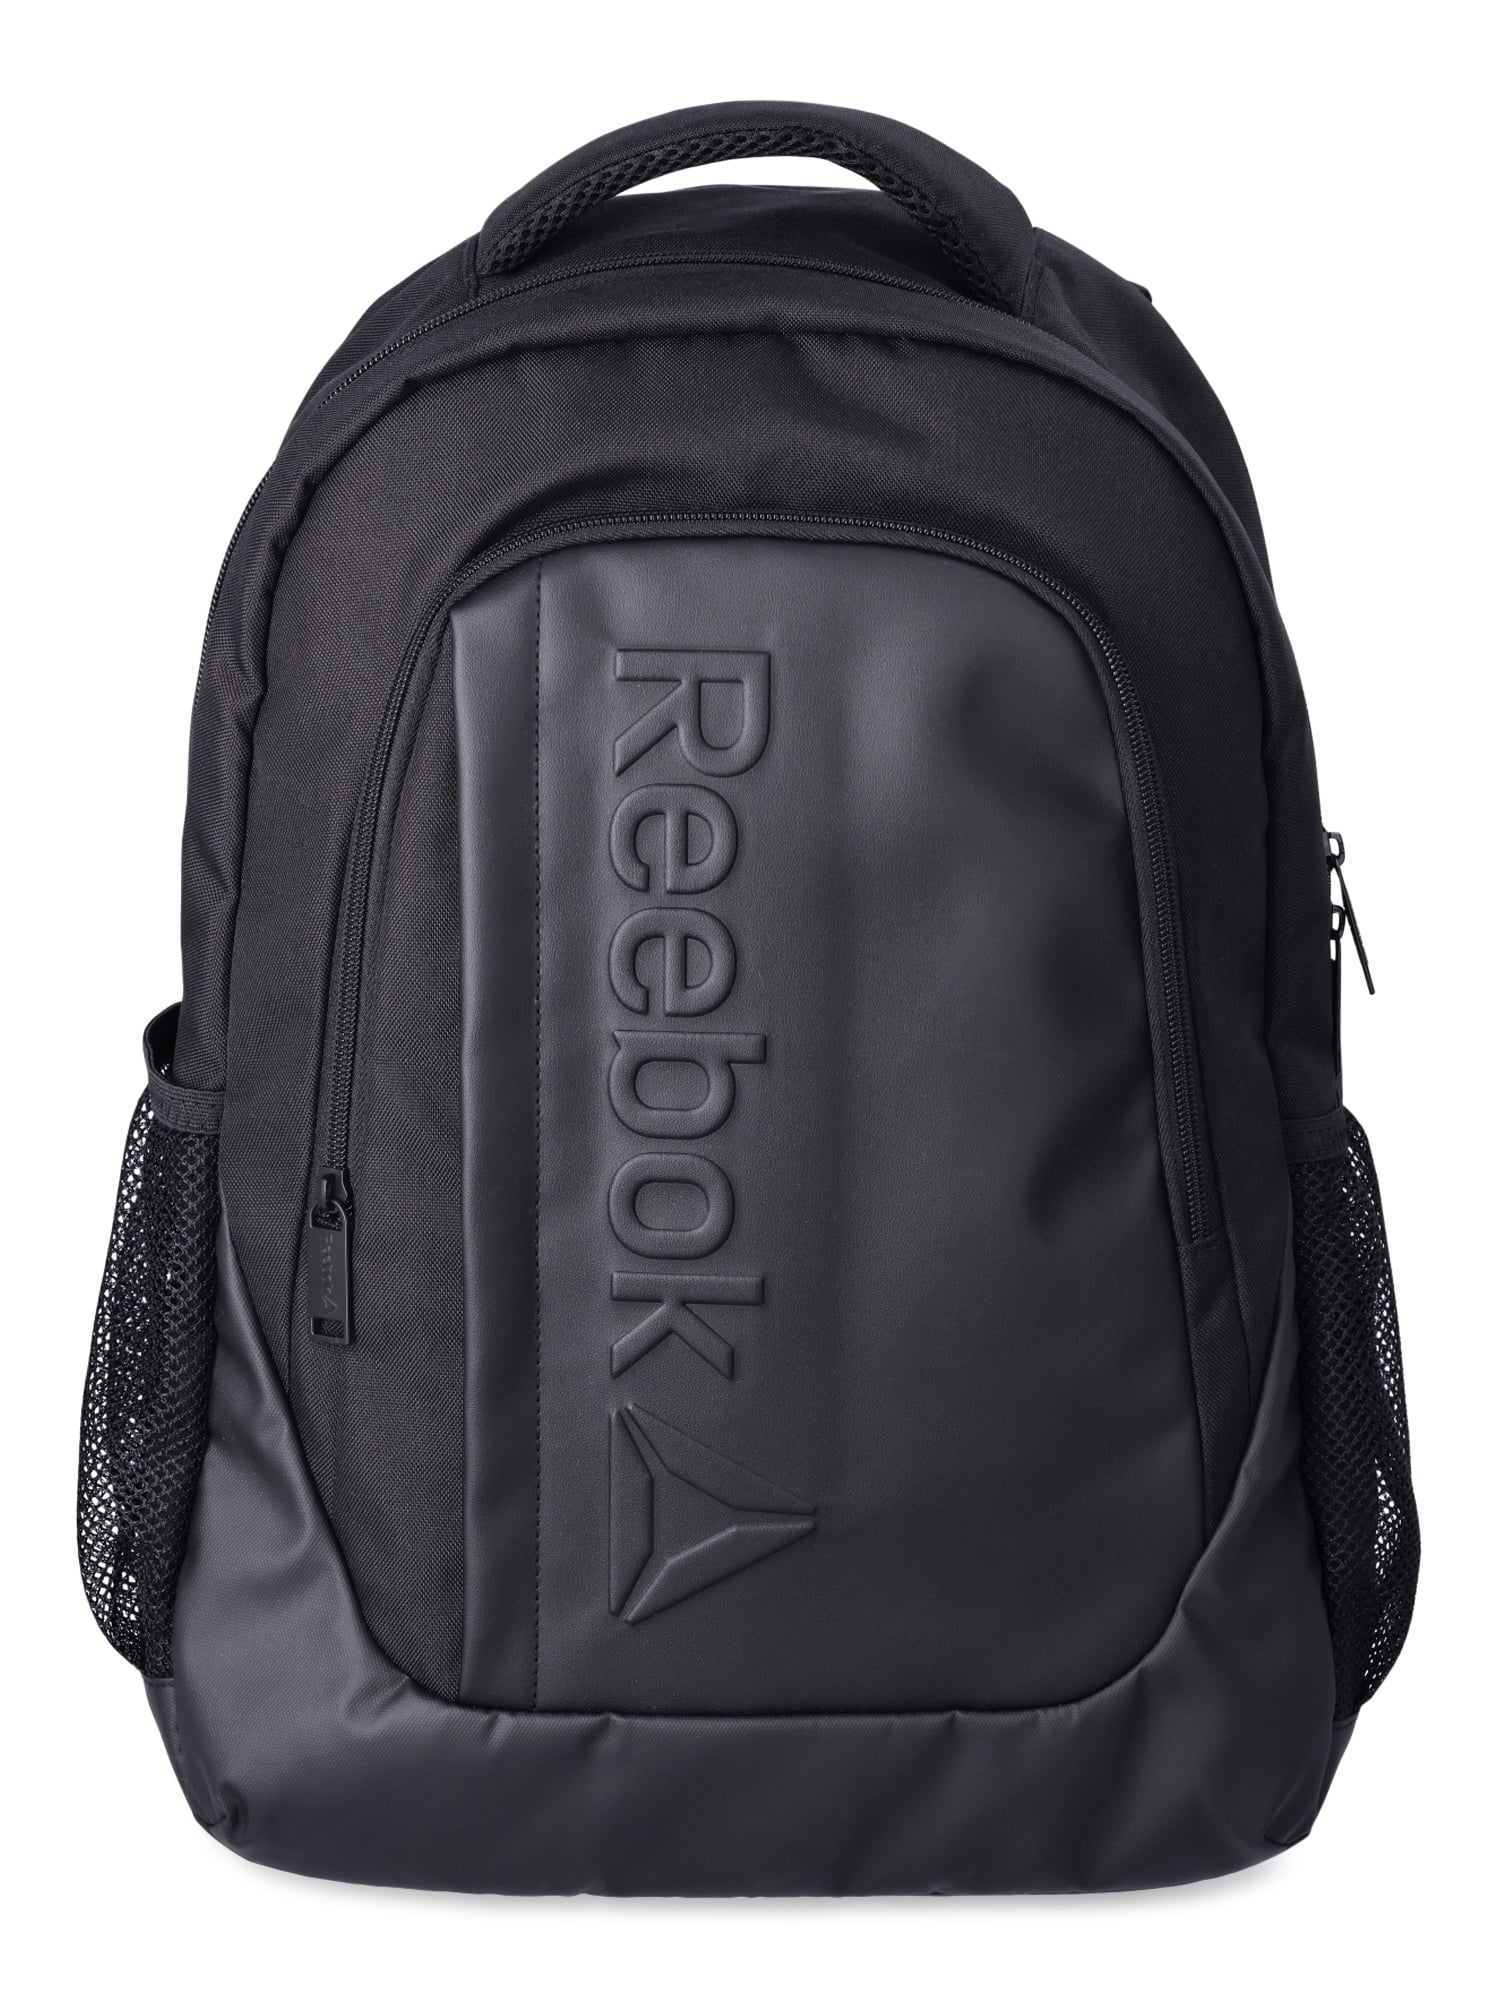 Reebok Unisex Adult Preston Laptop Backpack, Black - Walmart.com